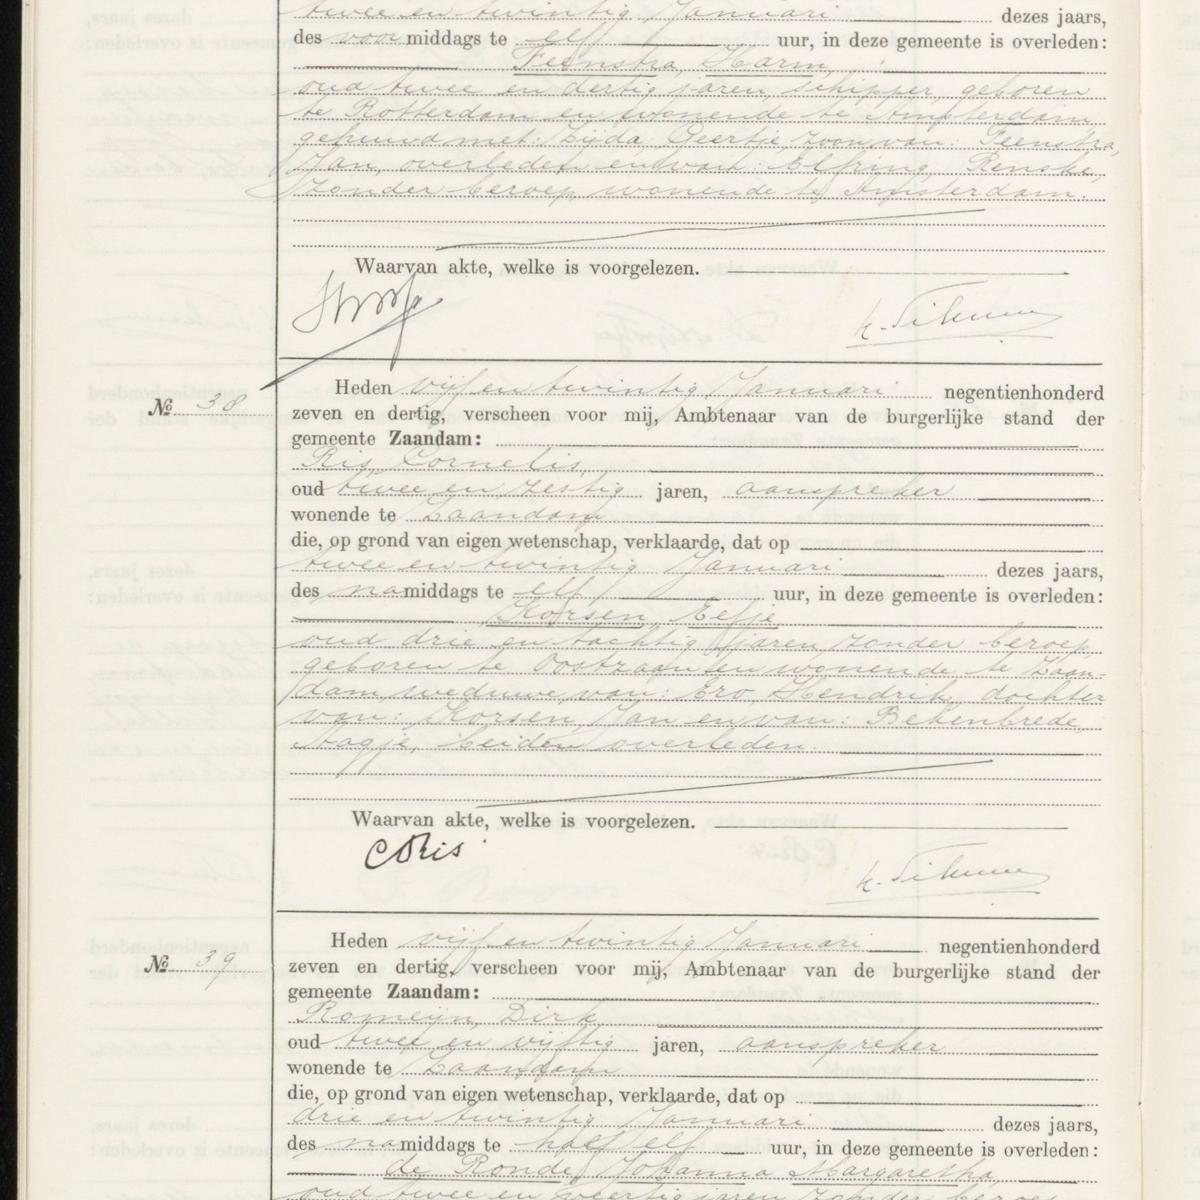 Civil registry of deaths, Zaandam, 1937, records 37-39